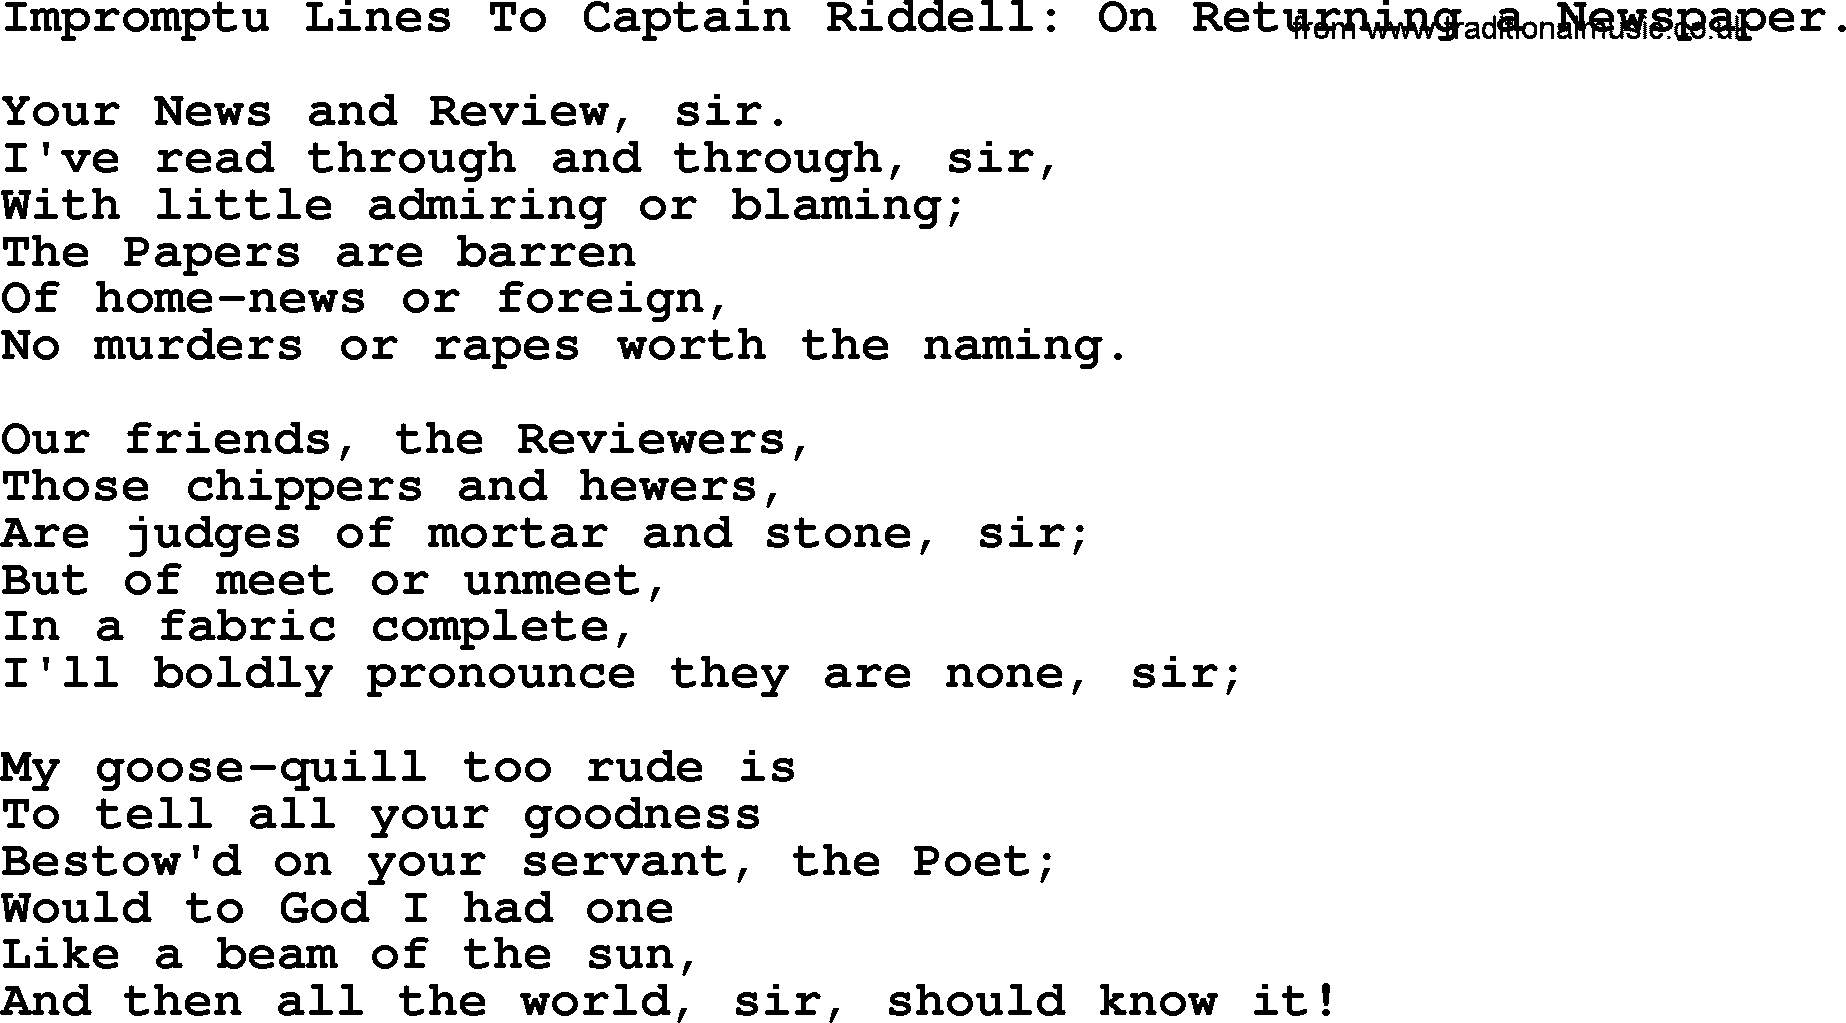 Robert Burns Songs & Lyrics: Impromptu Lines To Captain Riddell On Returning A Newspaper.